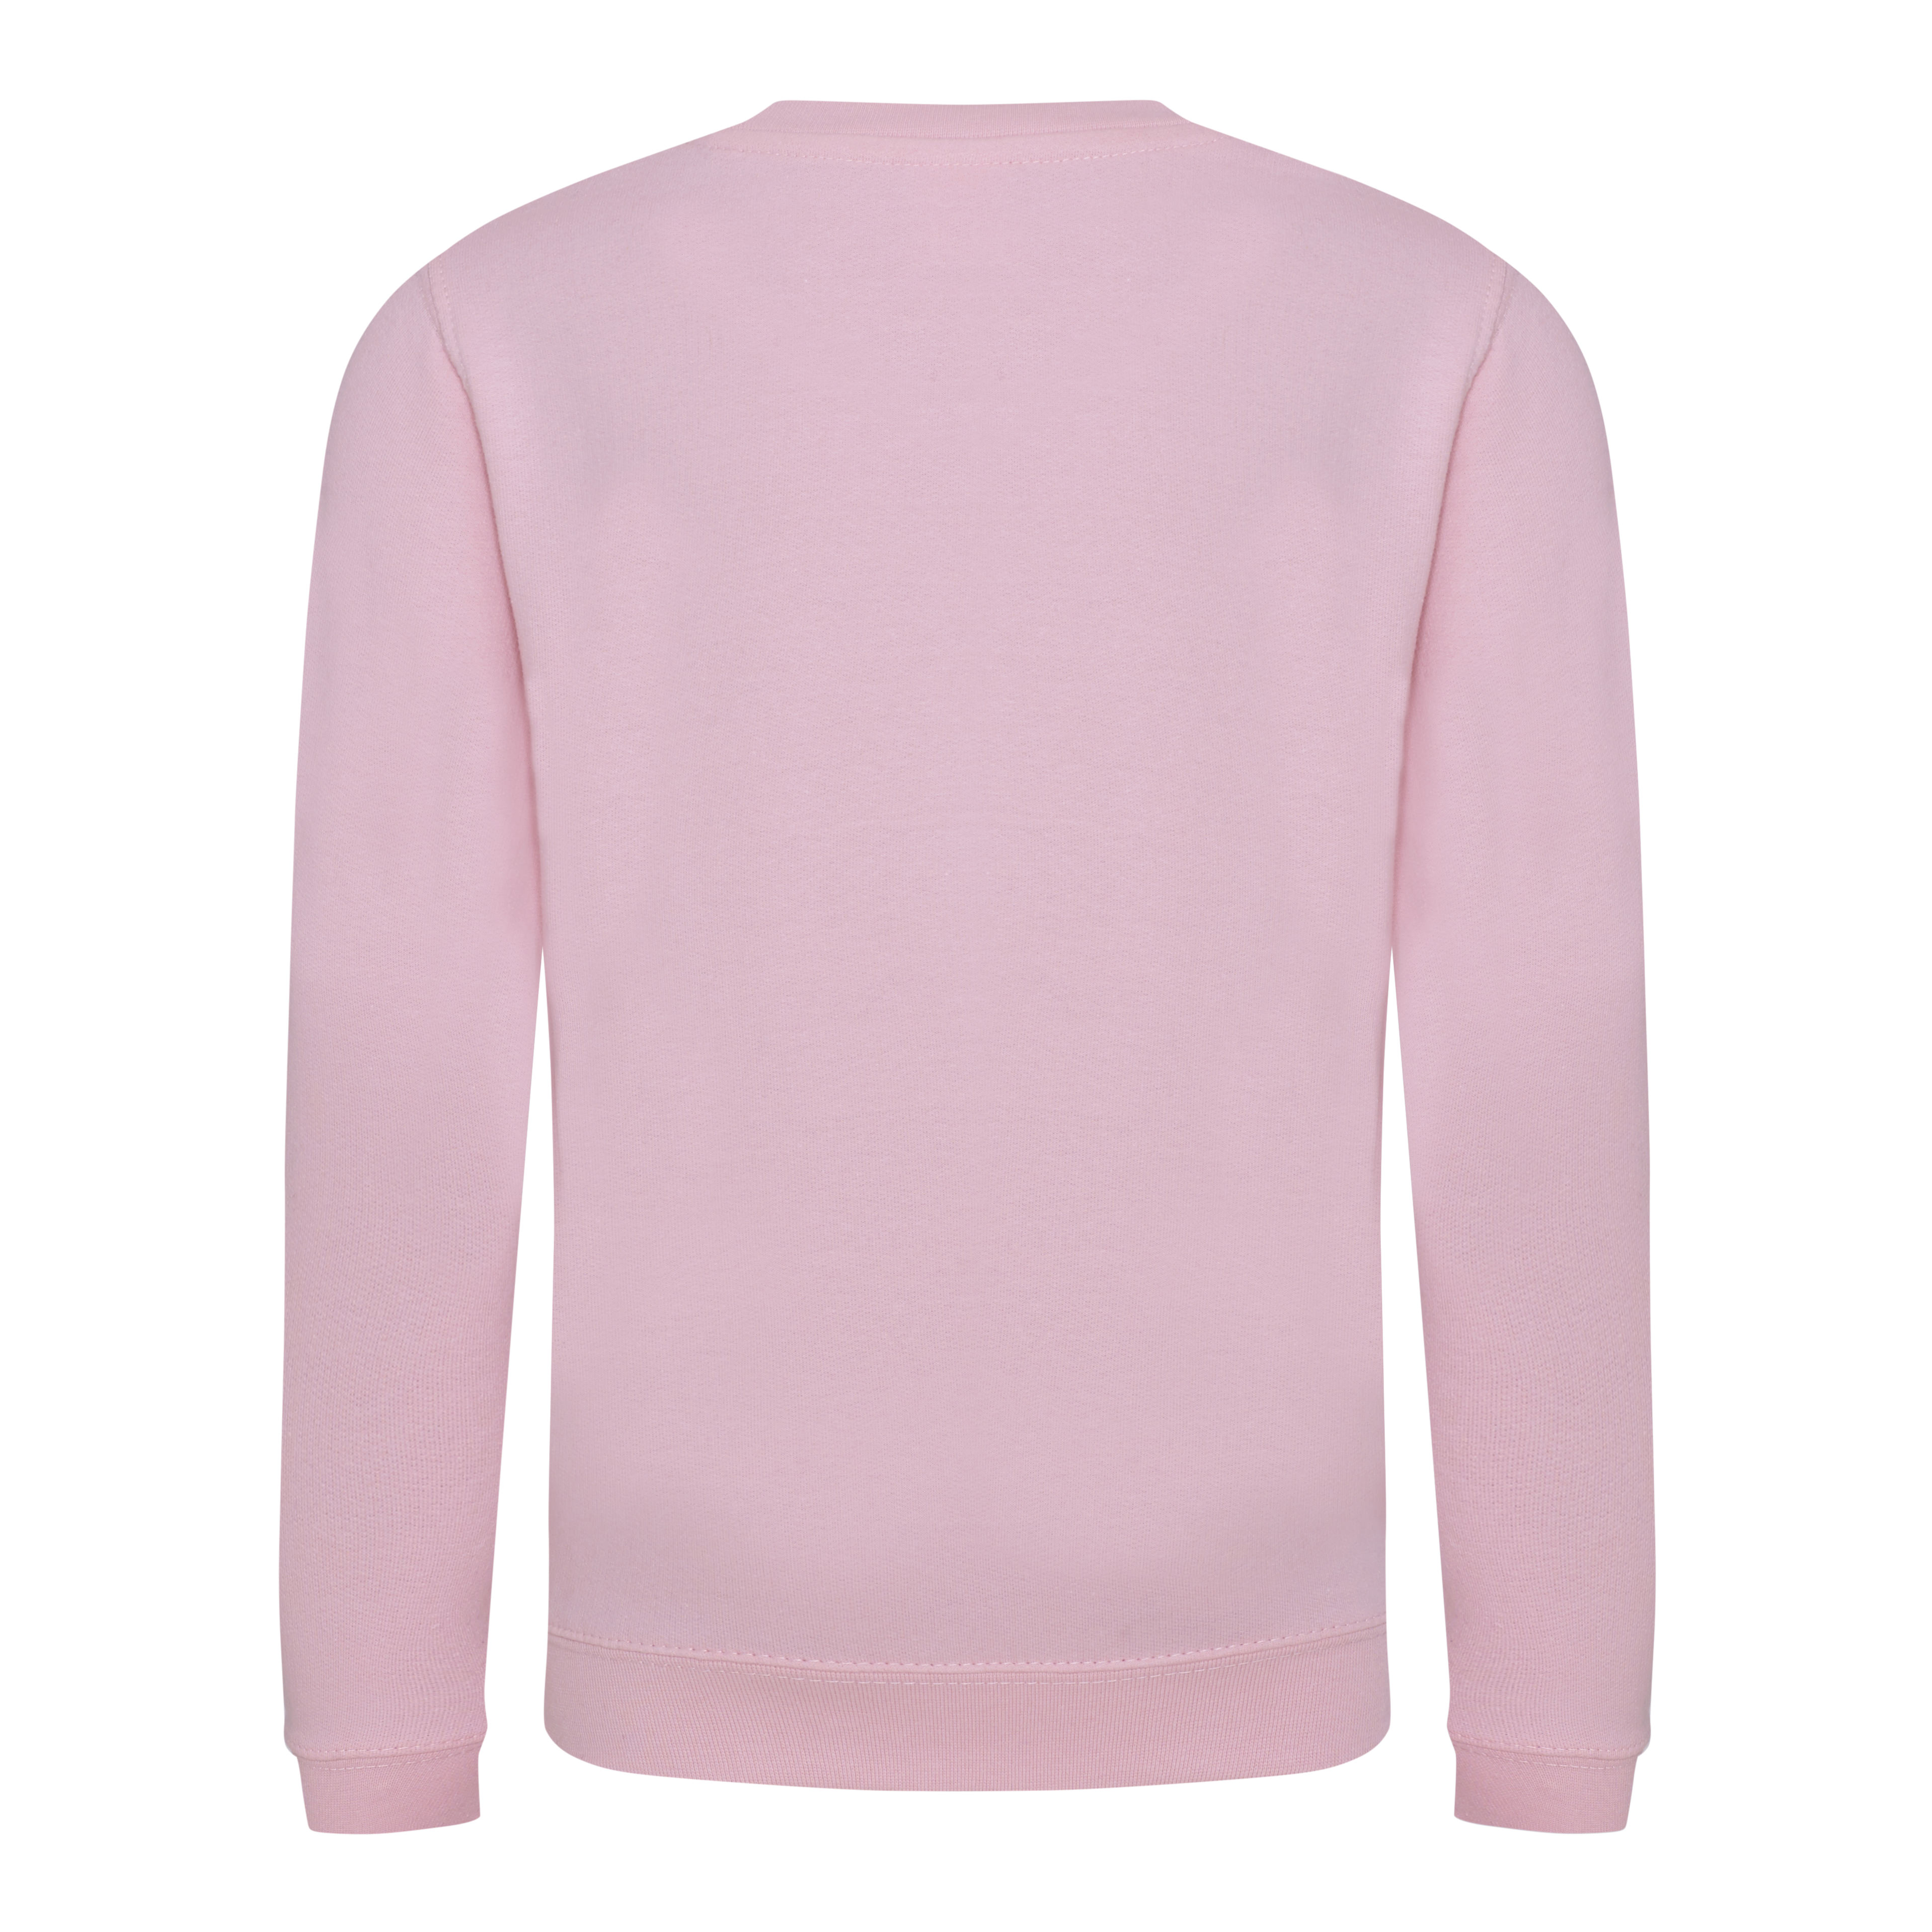 Rabatt 94 % Tenth sweatshirt KINDER Pullovers & Sweatshirts Sport Rosa/Weiß 6Y 